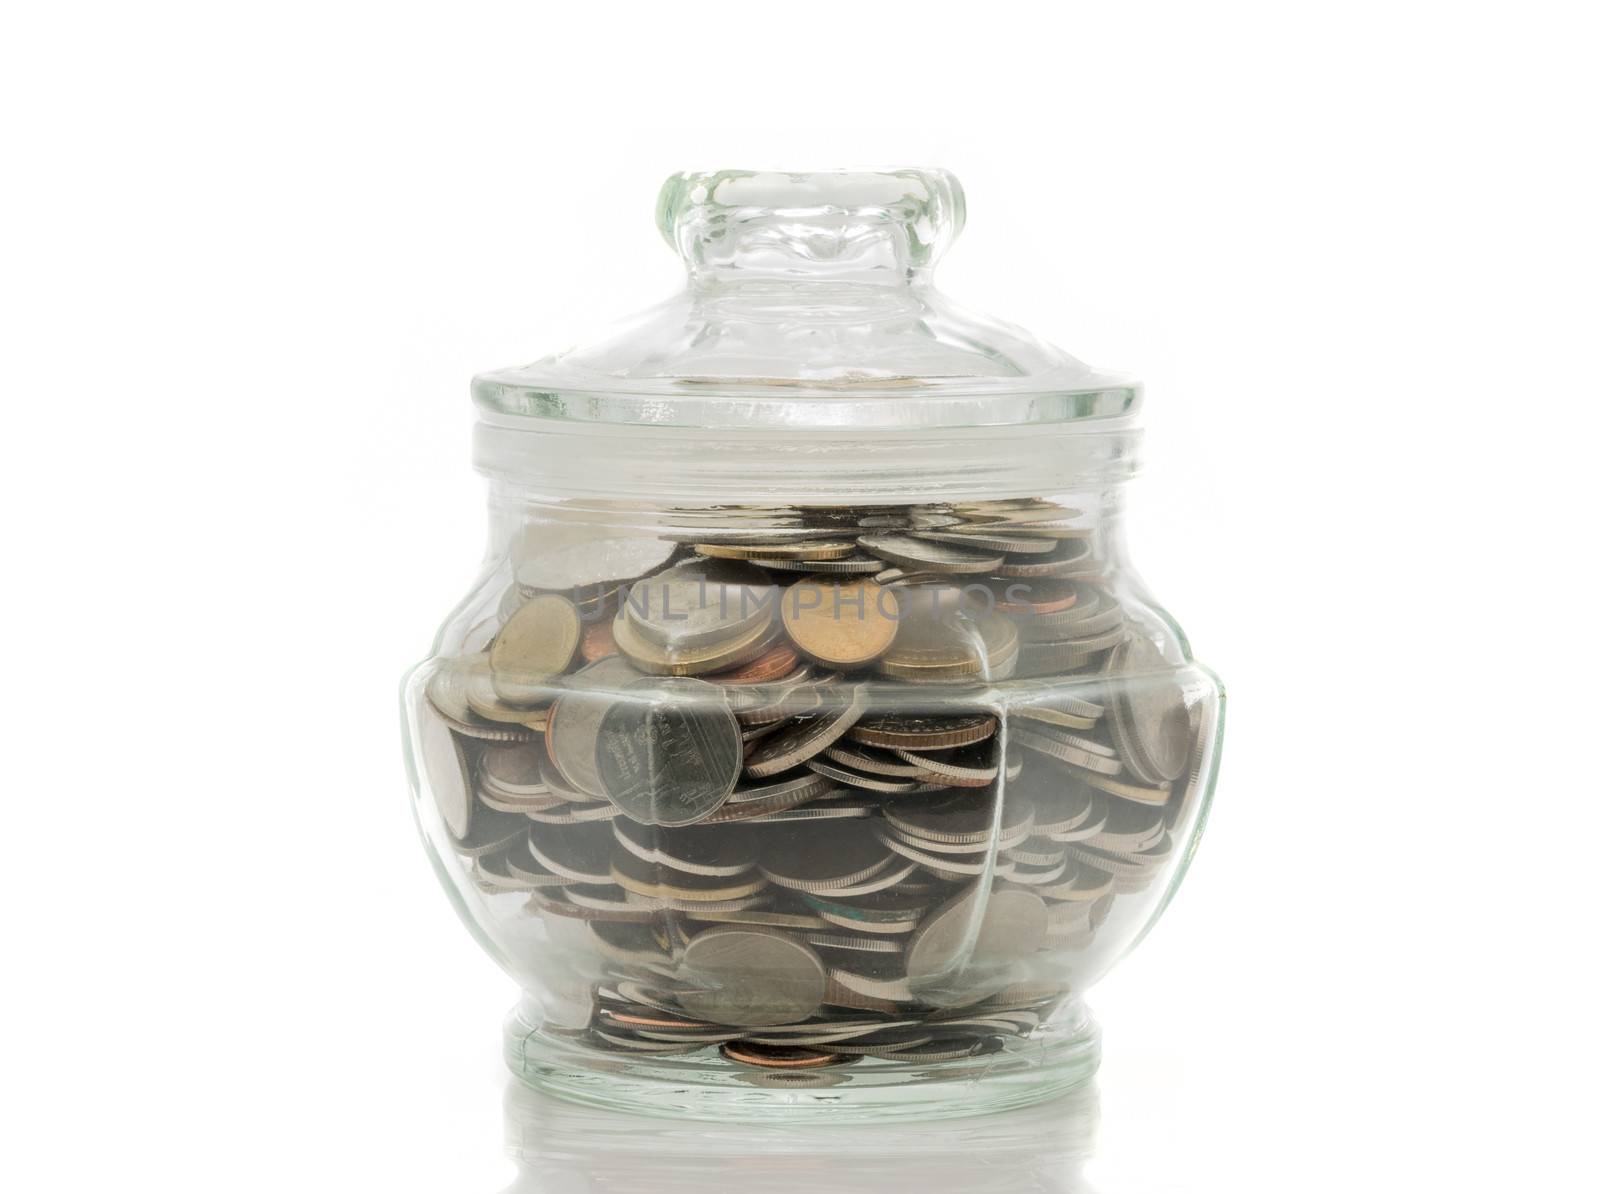 Bath coins in a glass jar with lid by Sorapop